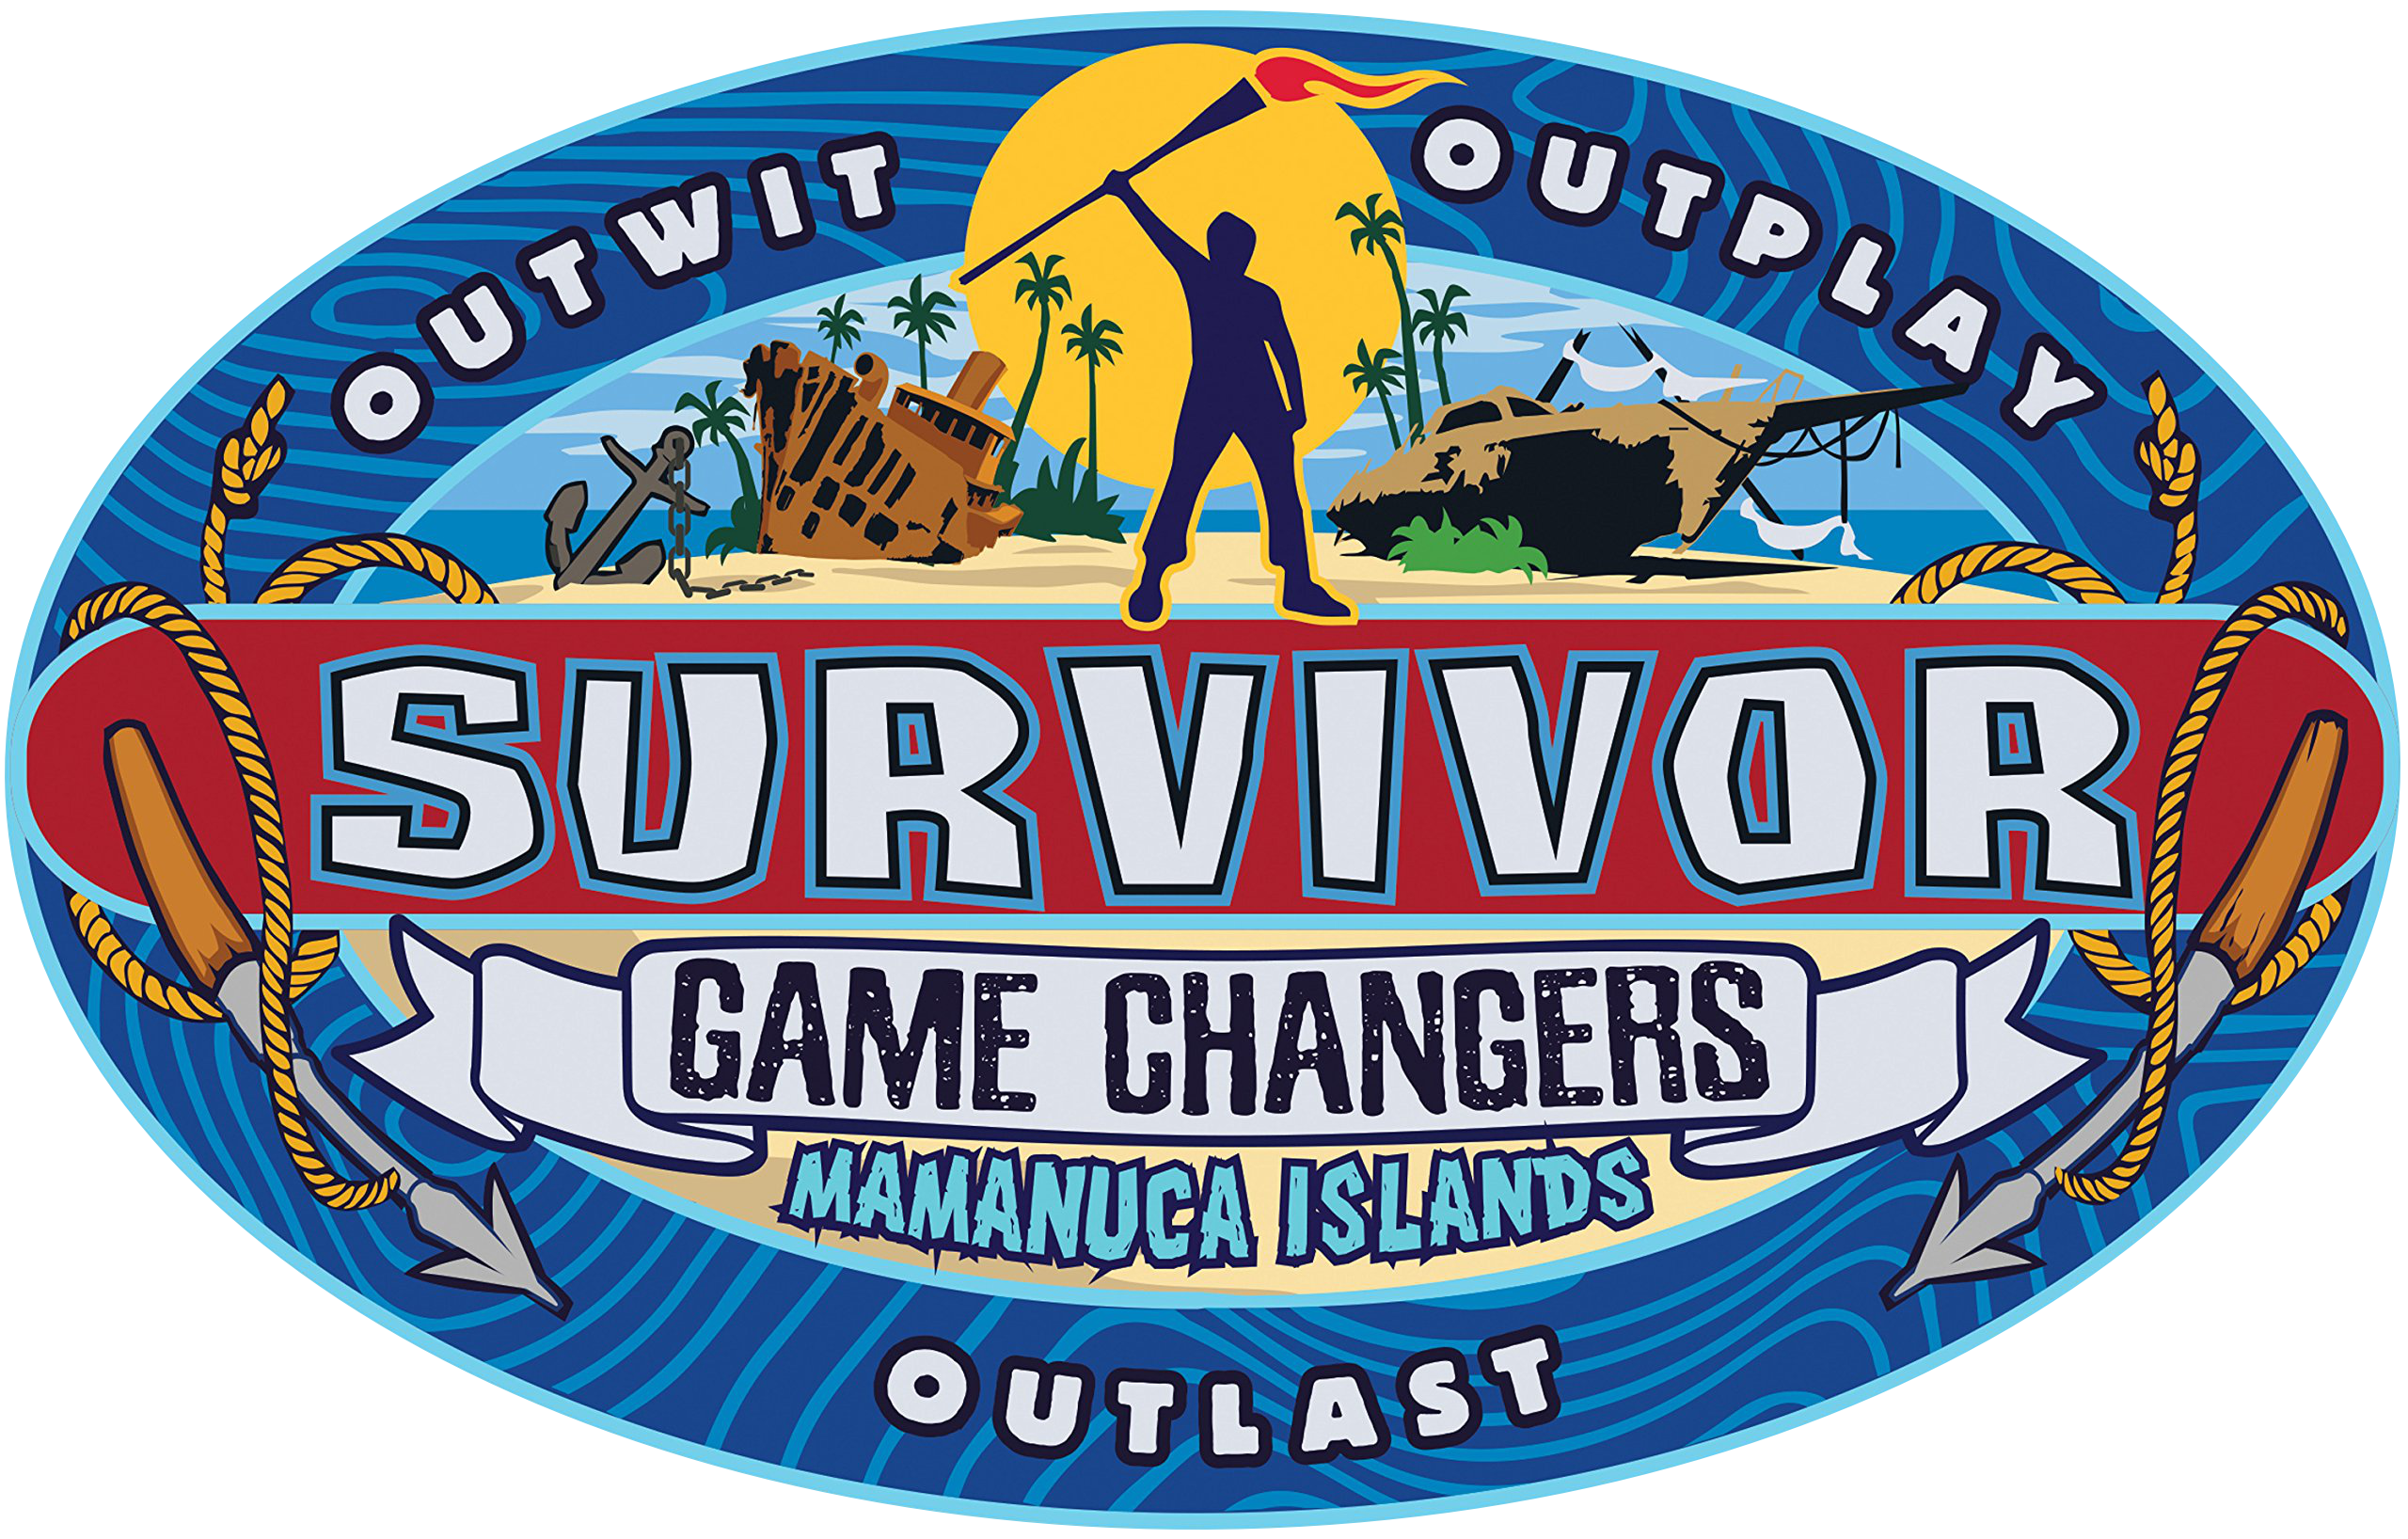 Survivor: Samoa - Wikipedia